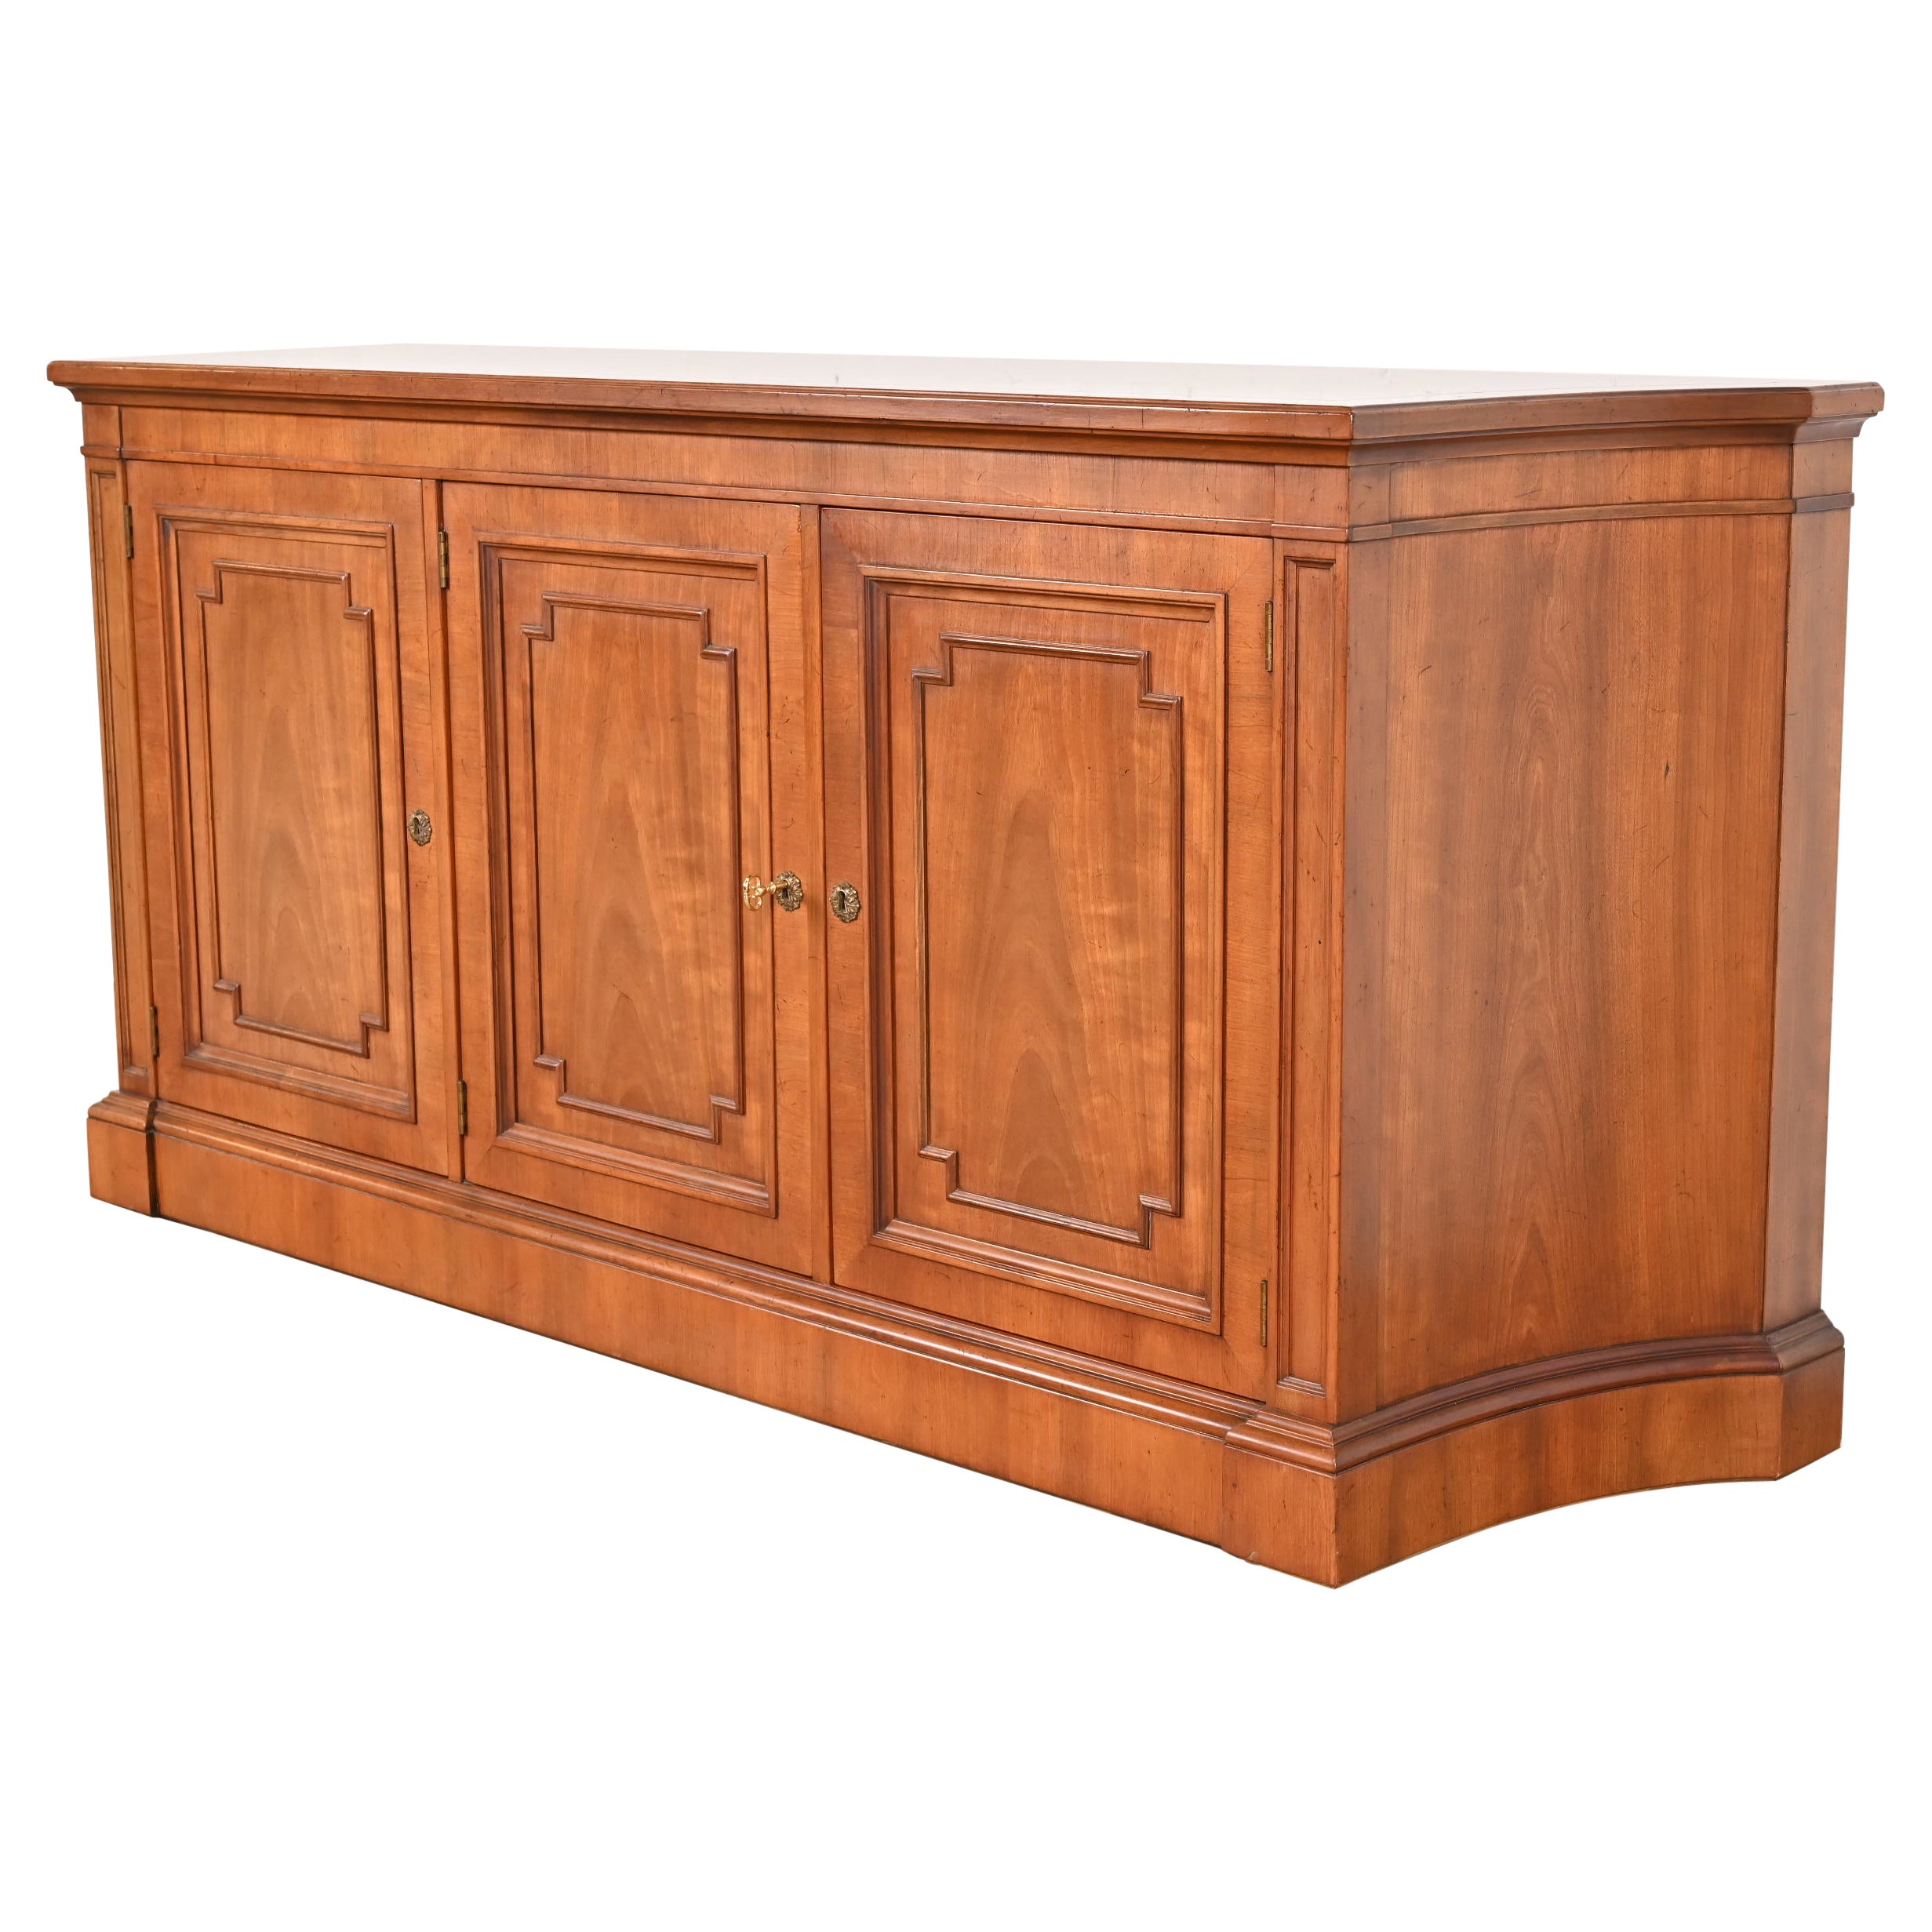 Kindel Furniture French Regency Louis XVI Cherry Wood Sideboard or Bar Cabinet